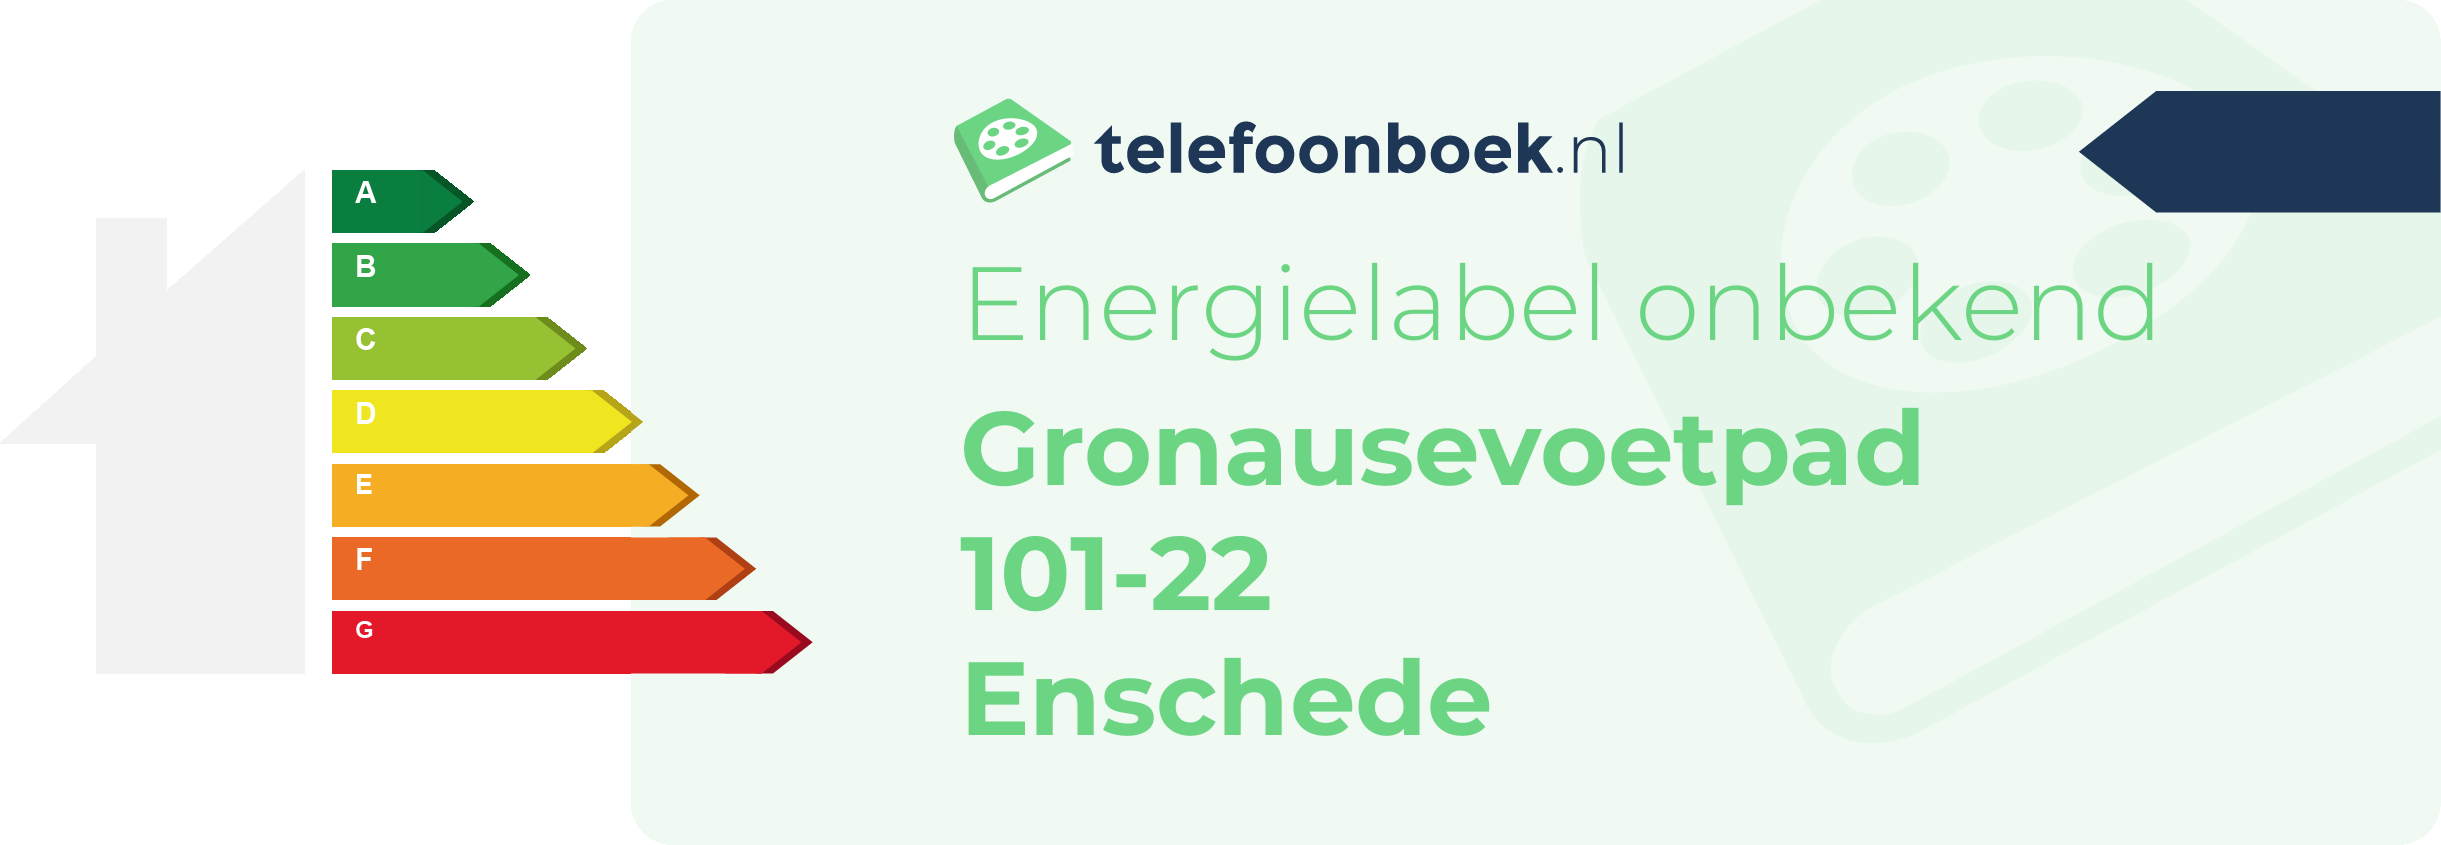 Energielabel Gronausevoetpad 101-22 Enschede